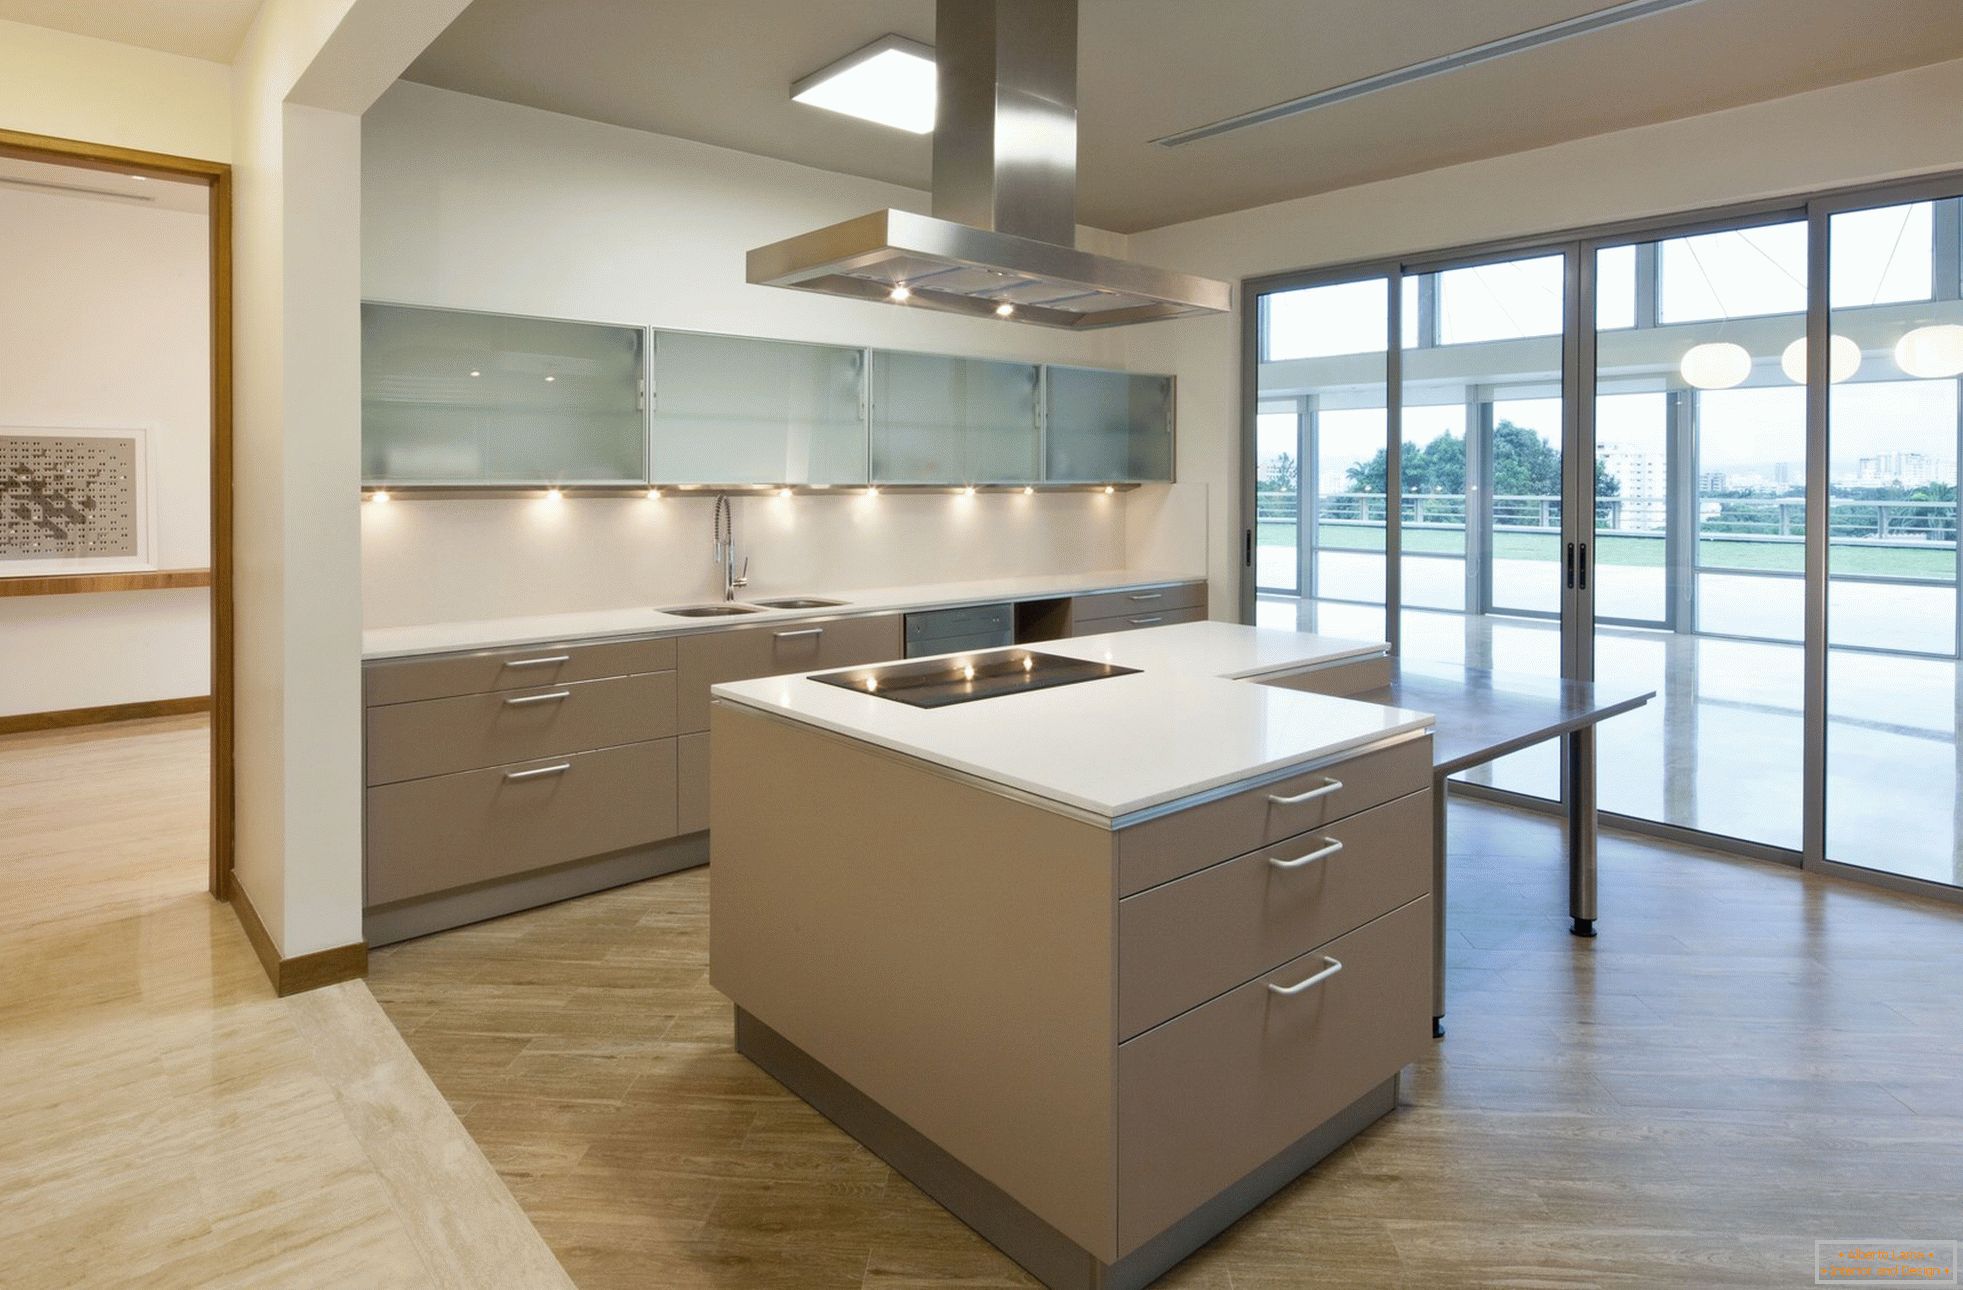 Kitchen with panoramic windows